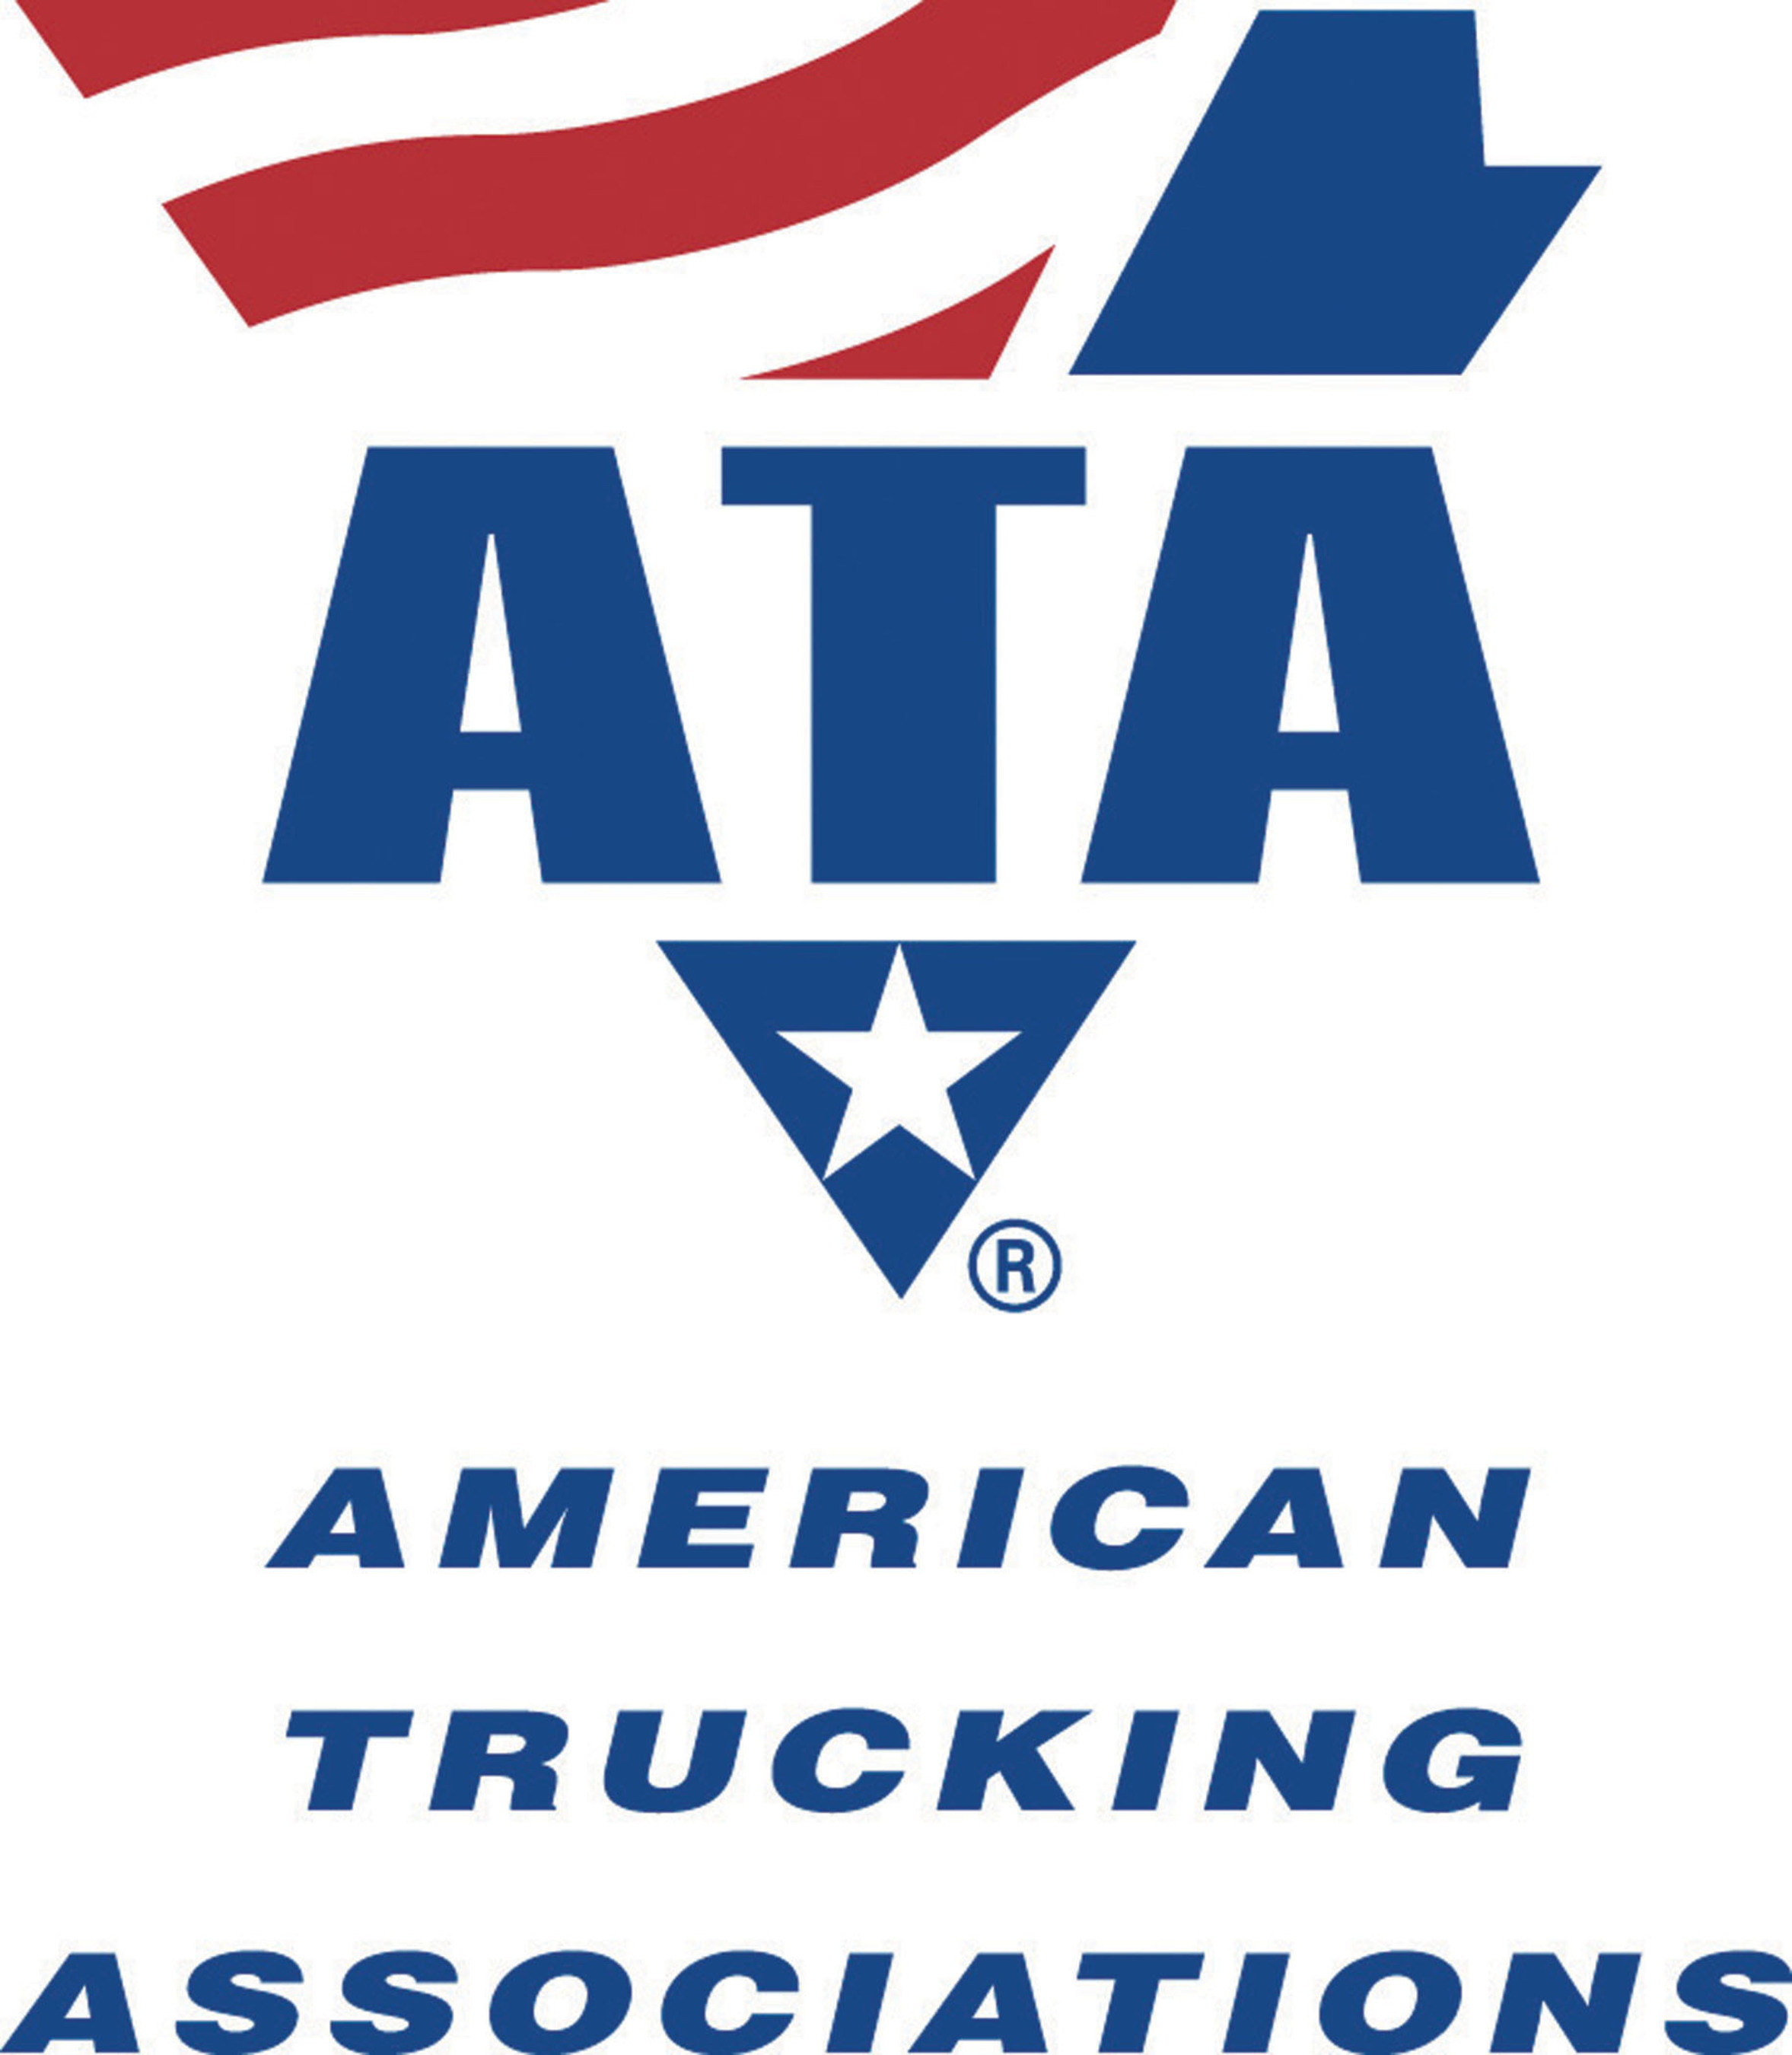 American Trucking Associations logo.